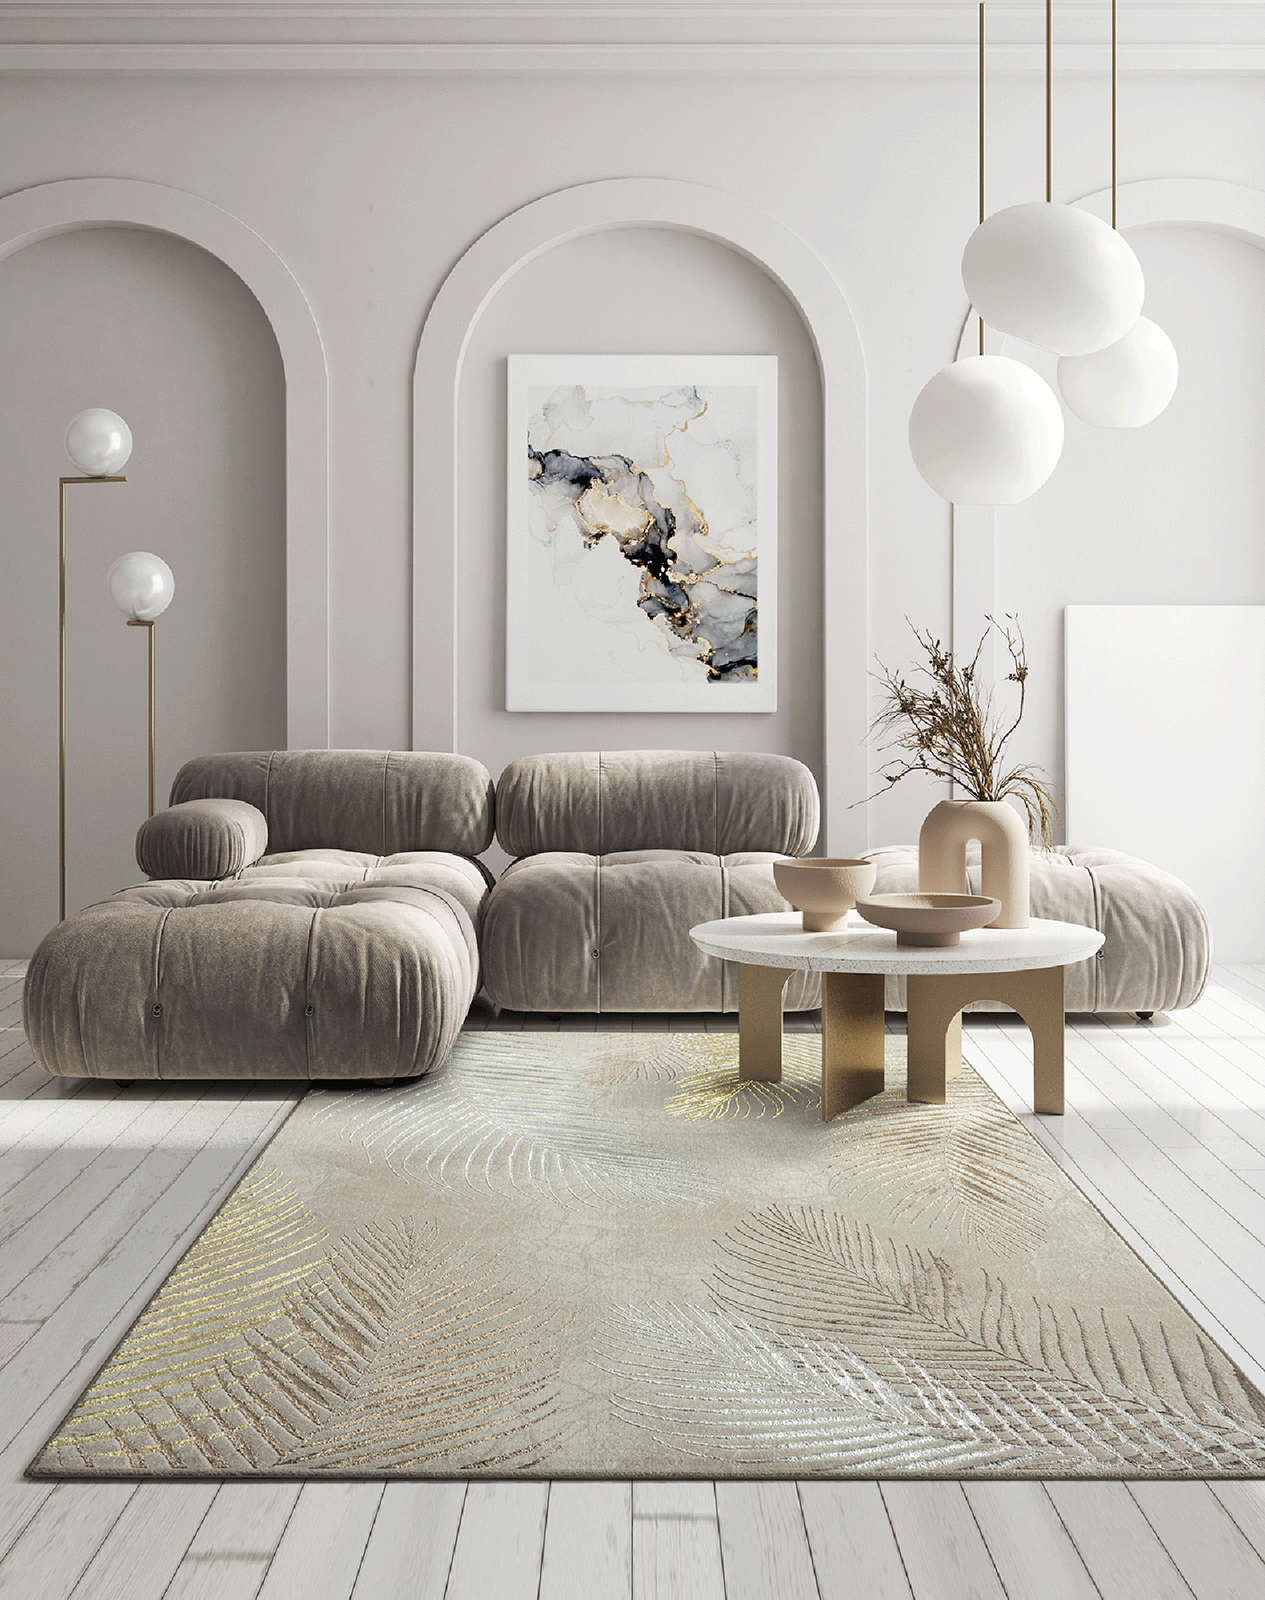             soft cream high pile carpet - 290 x 200 cm
        